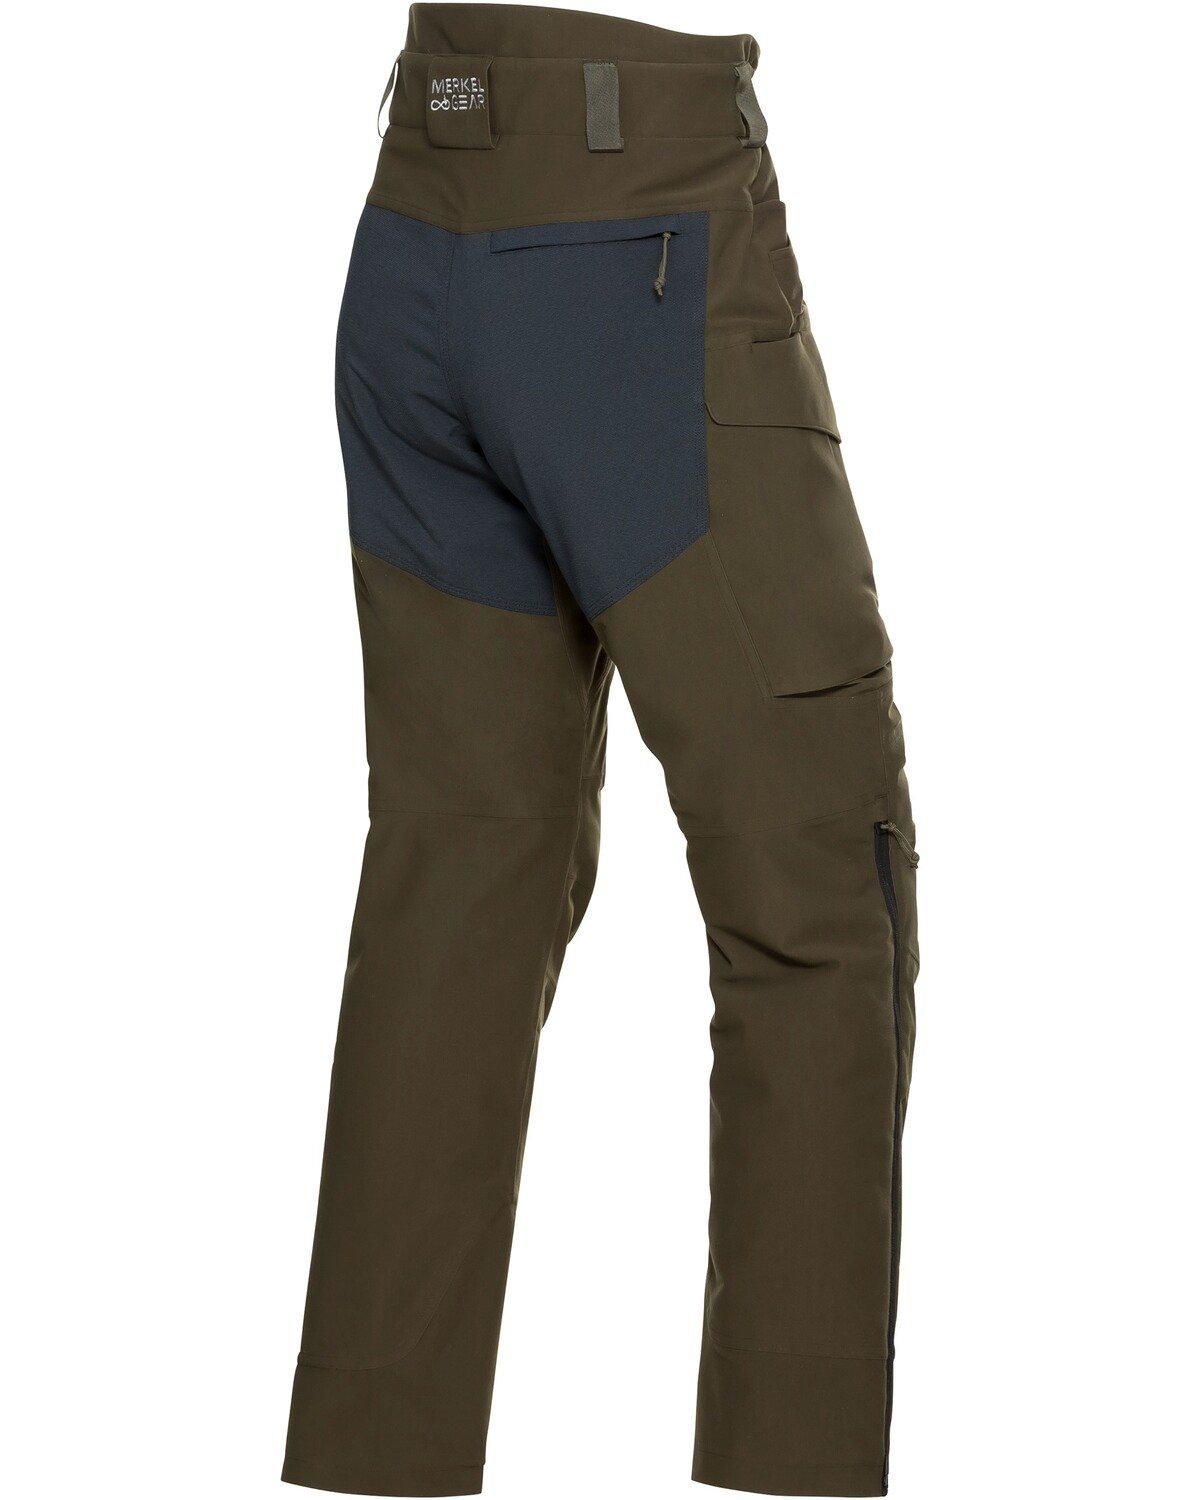 Outdoorhose G-LOFT® Gear WNTR Merkel Hose Pants Expedition